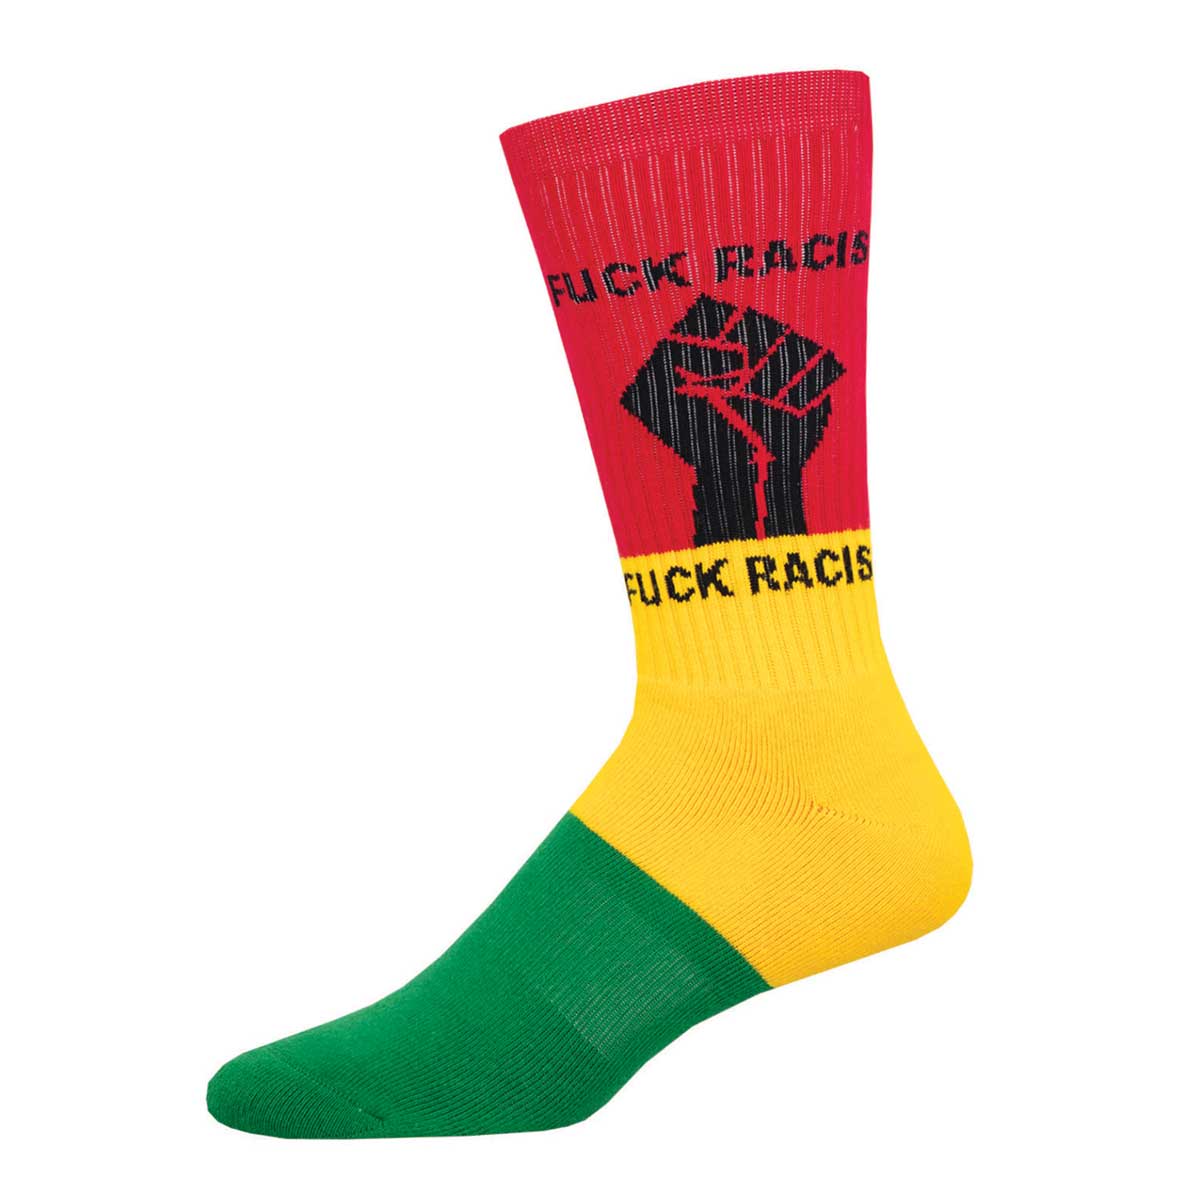 Anti-Racism Socks  Athletic Novelty Designs by Socksmith